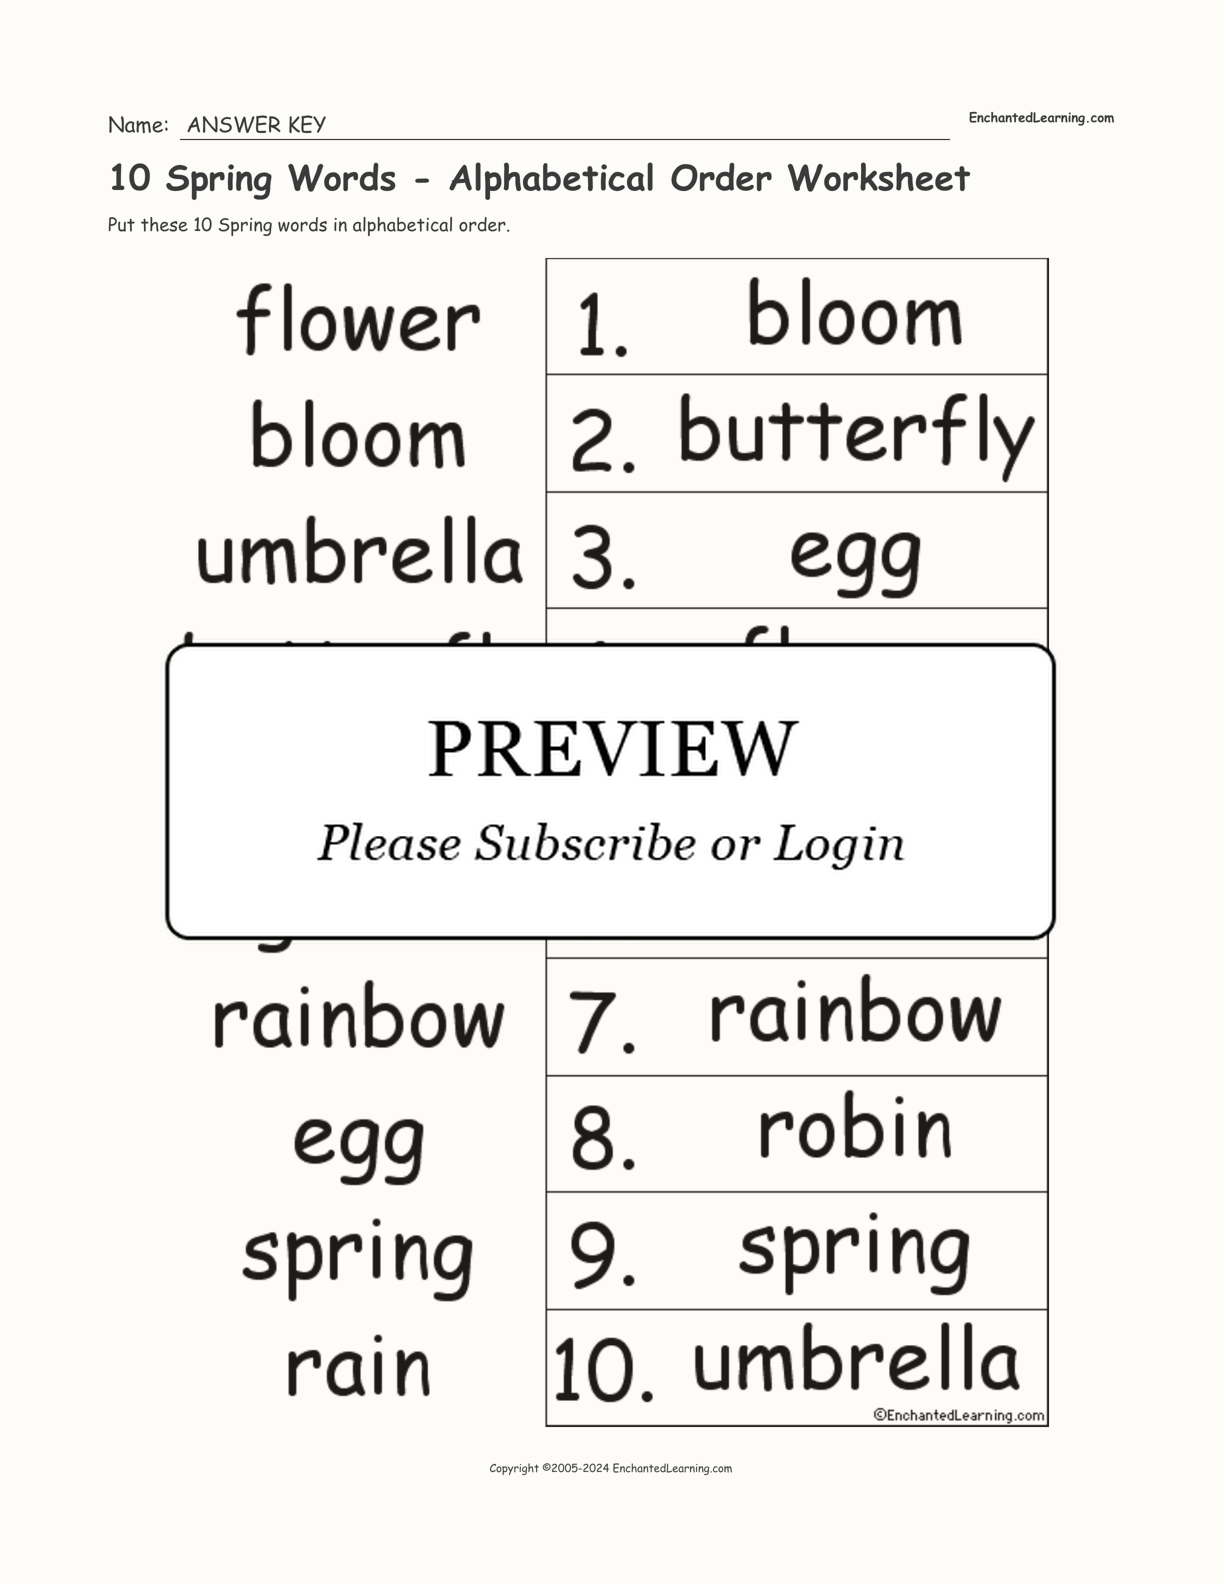 10 Spring Words - Alphabetical Order Worksheet interactive worksheet page 2